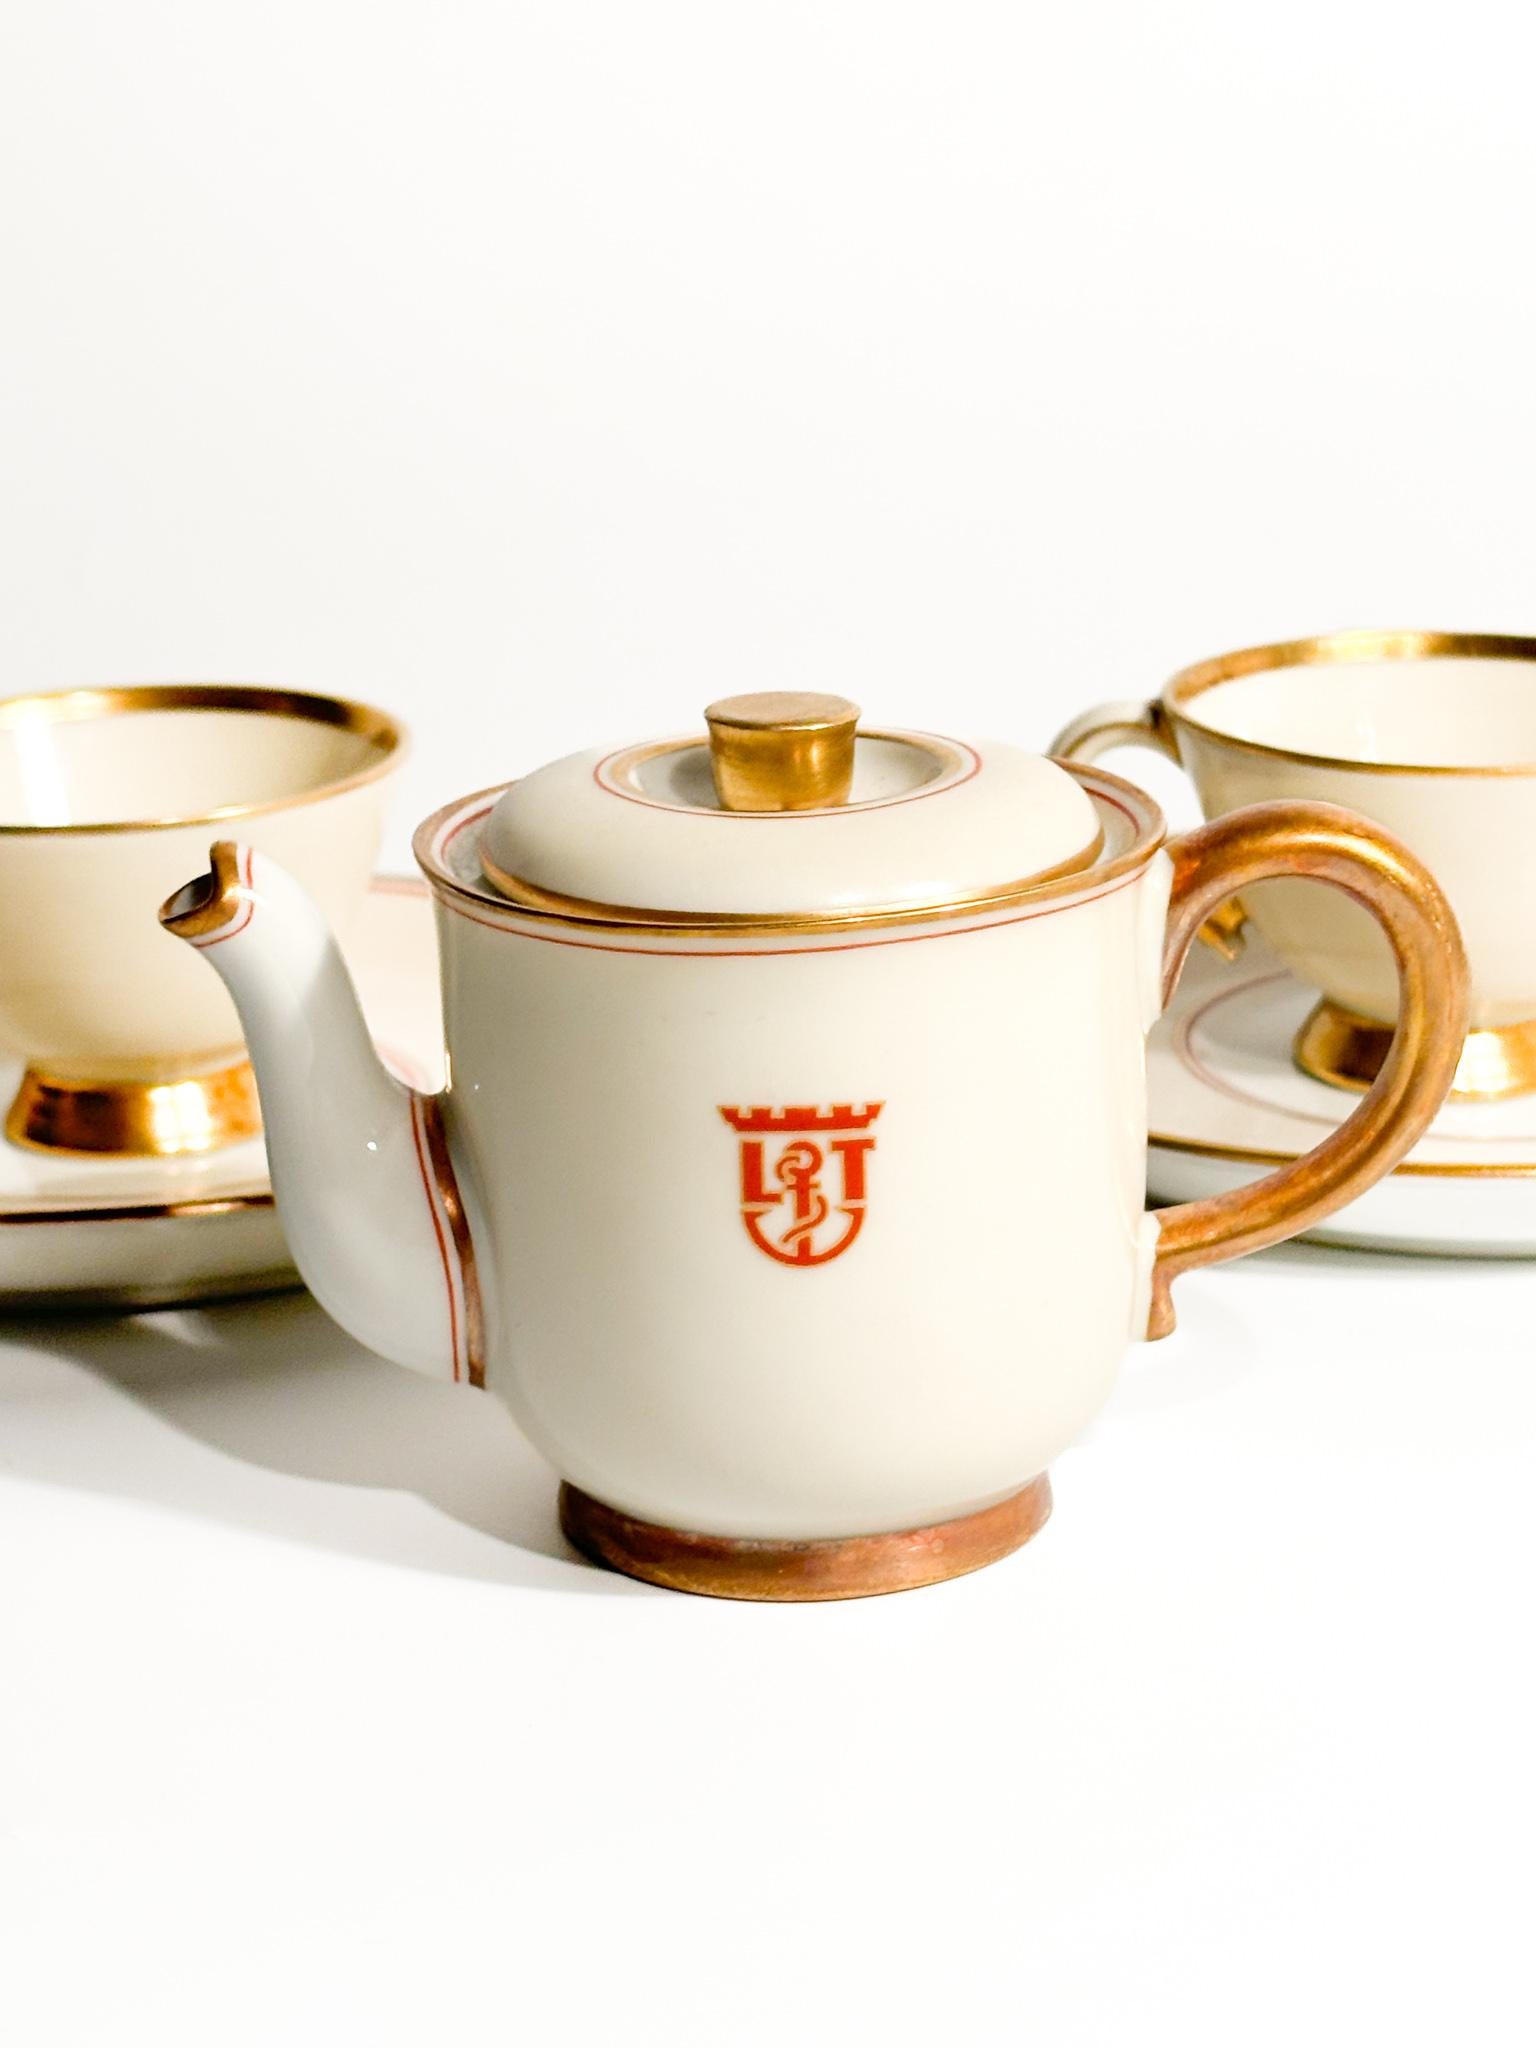 Art Deco Gio Ponti Cups and Coffee Pot Designed for the Victoria Lloyd Triestino Ship  For Sale